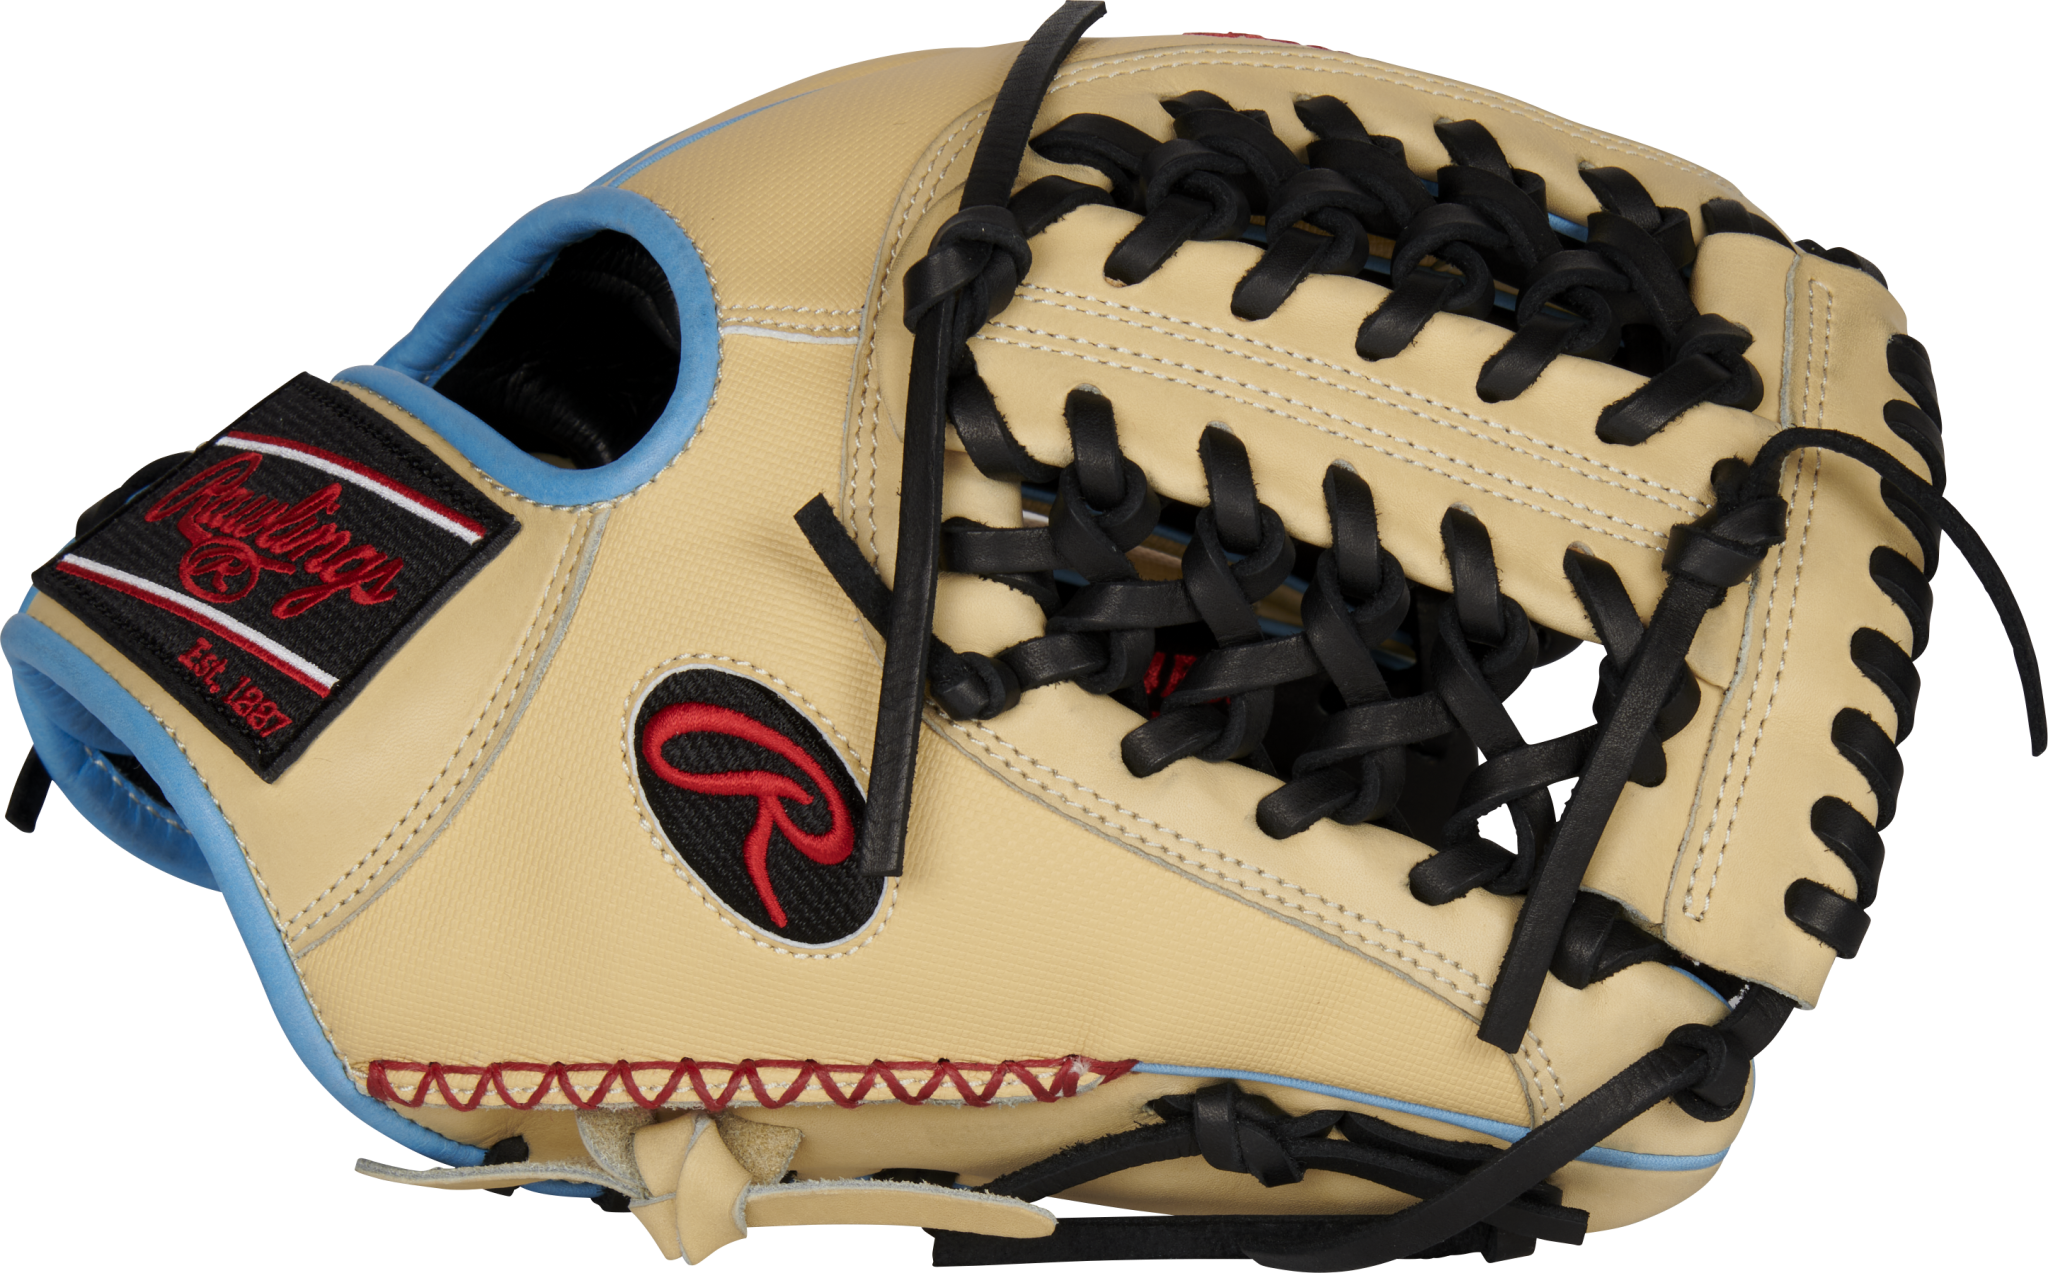 Rawlings Pro Preferred 11.5 Infield Baseball Glove: PROS204-4BSS Left Hand Throw